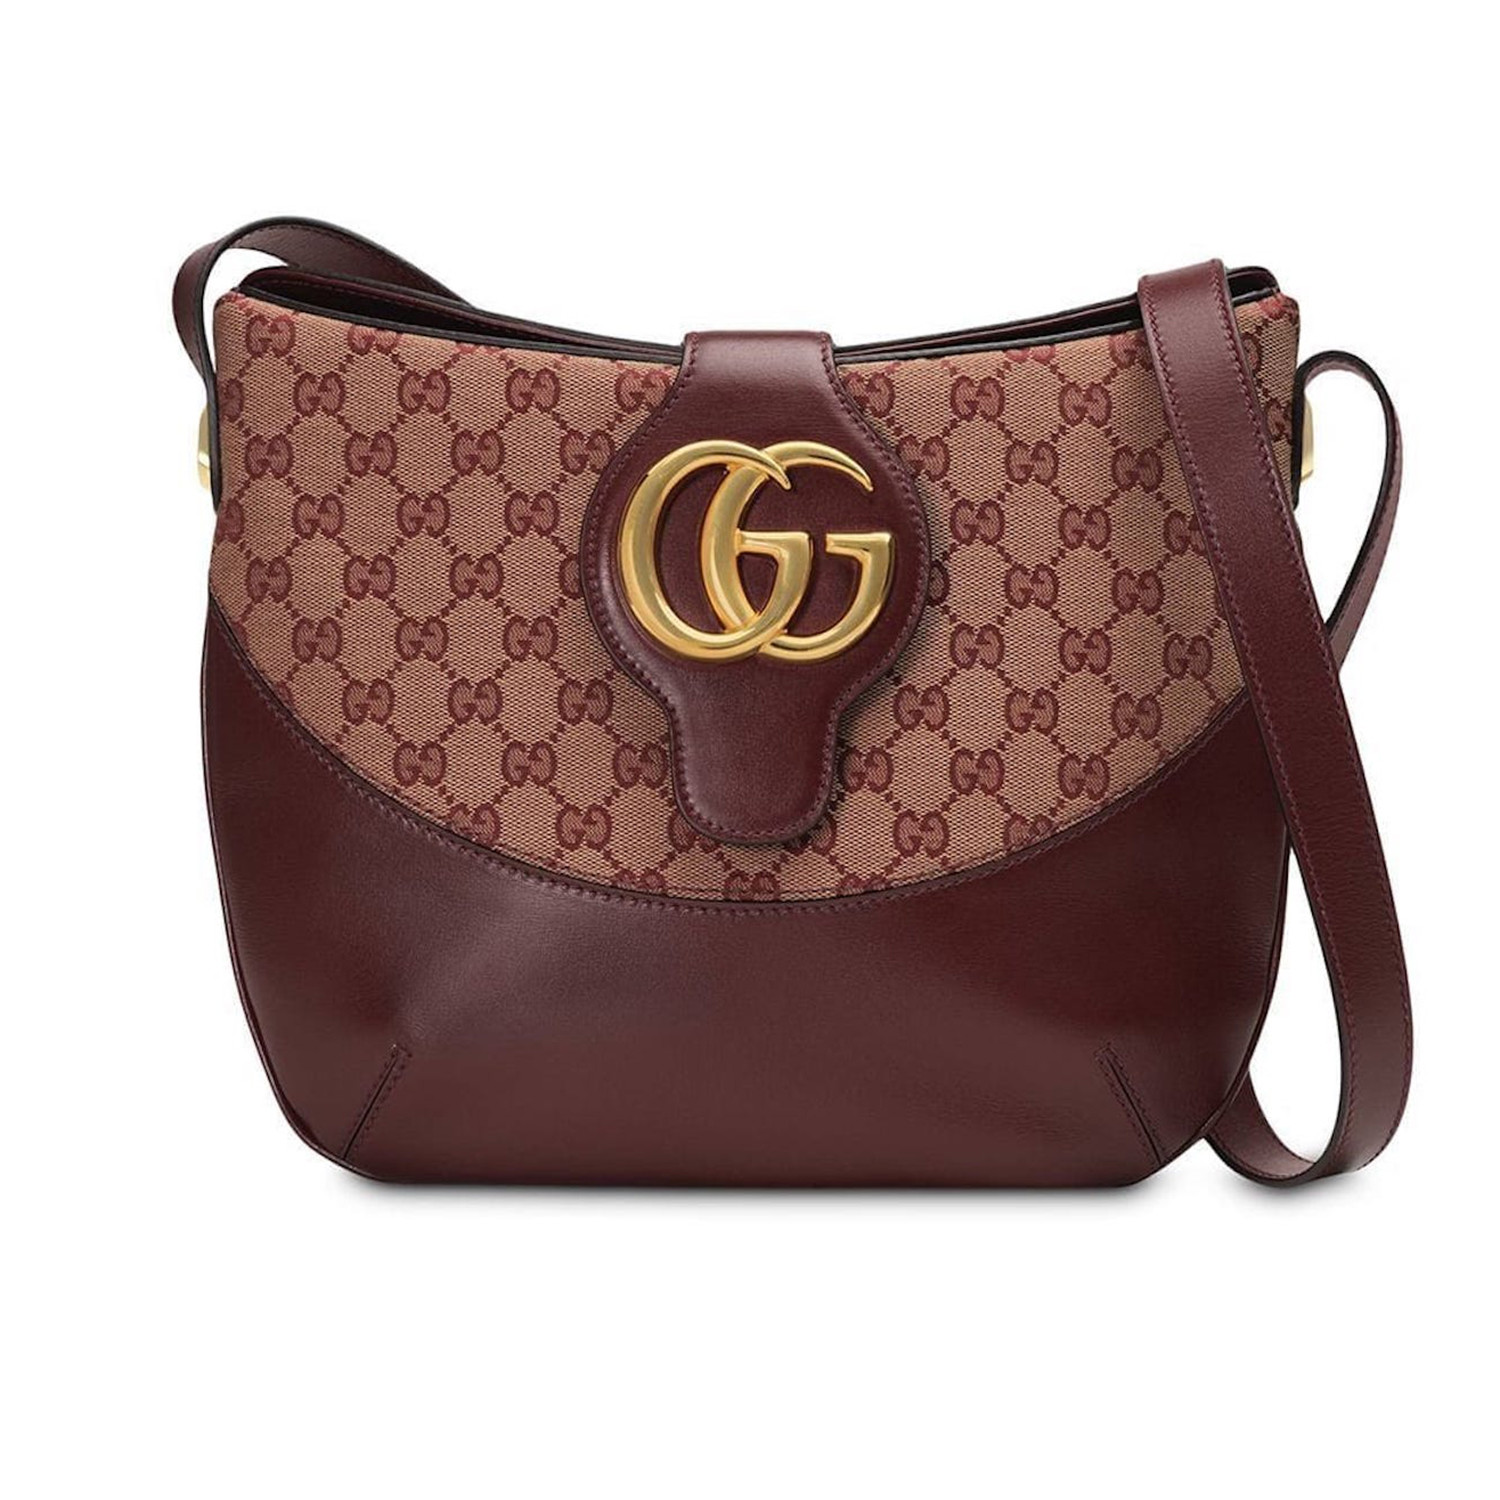 Gucci Designer Handbag | Literacy Ontario Central South